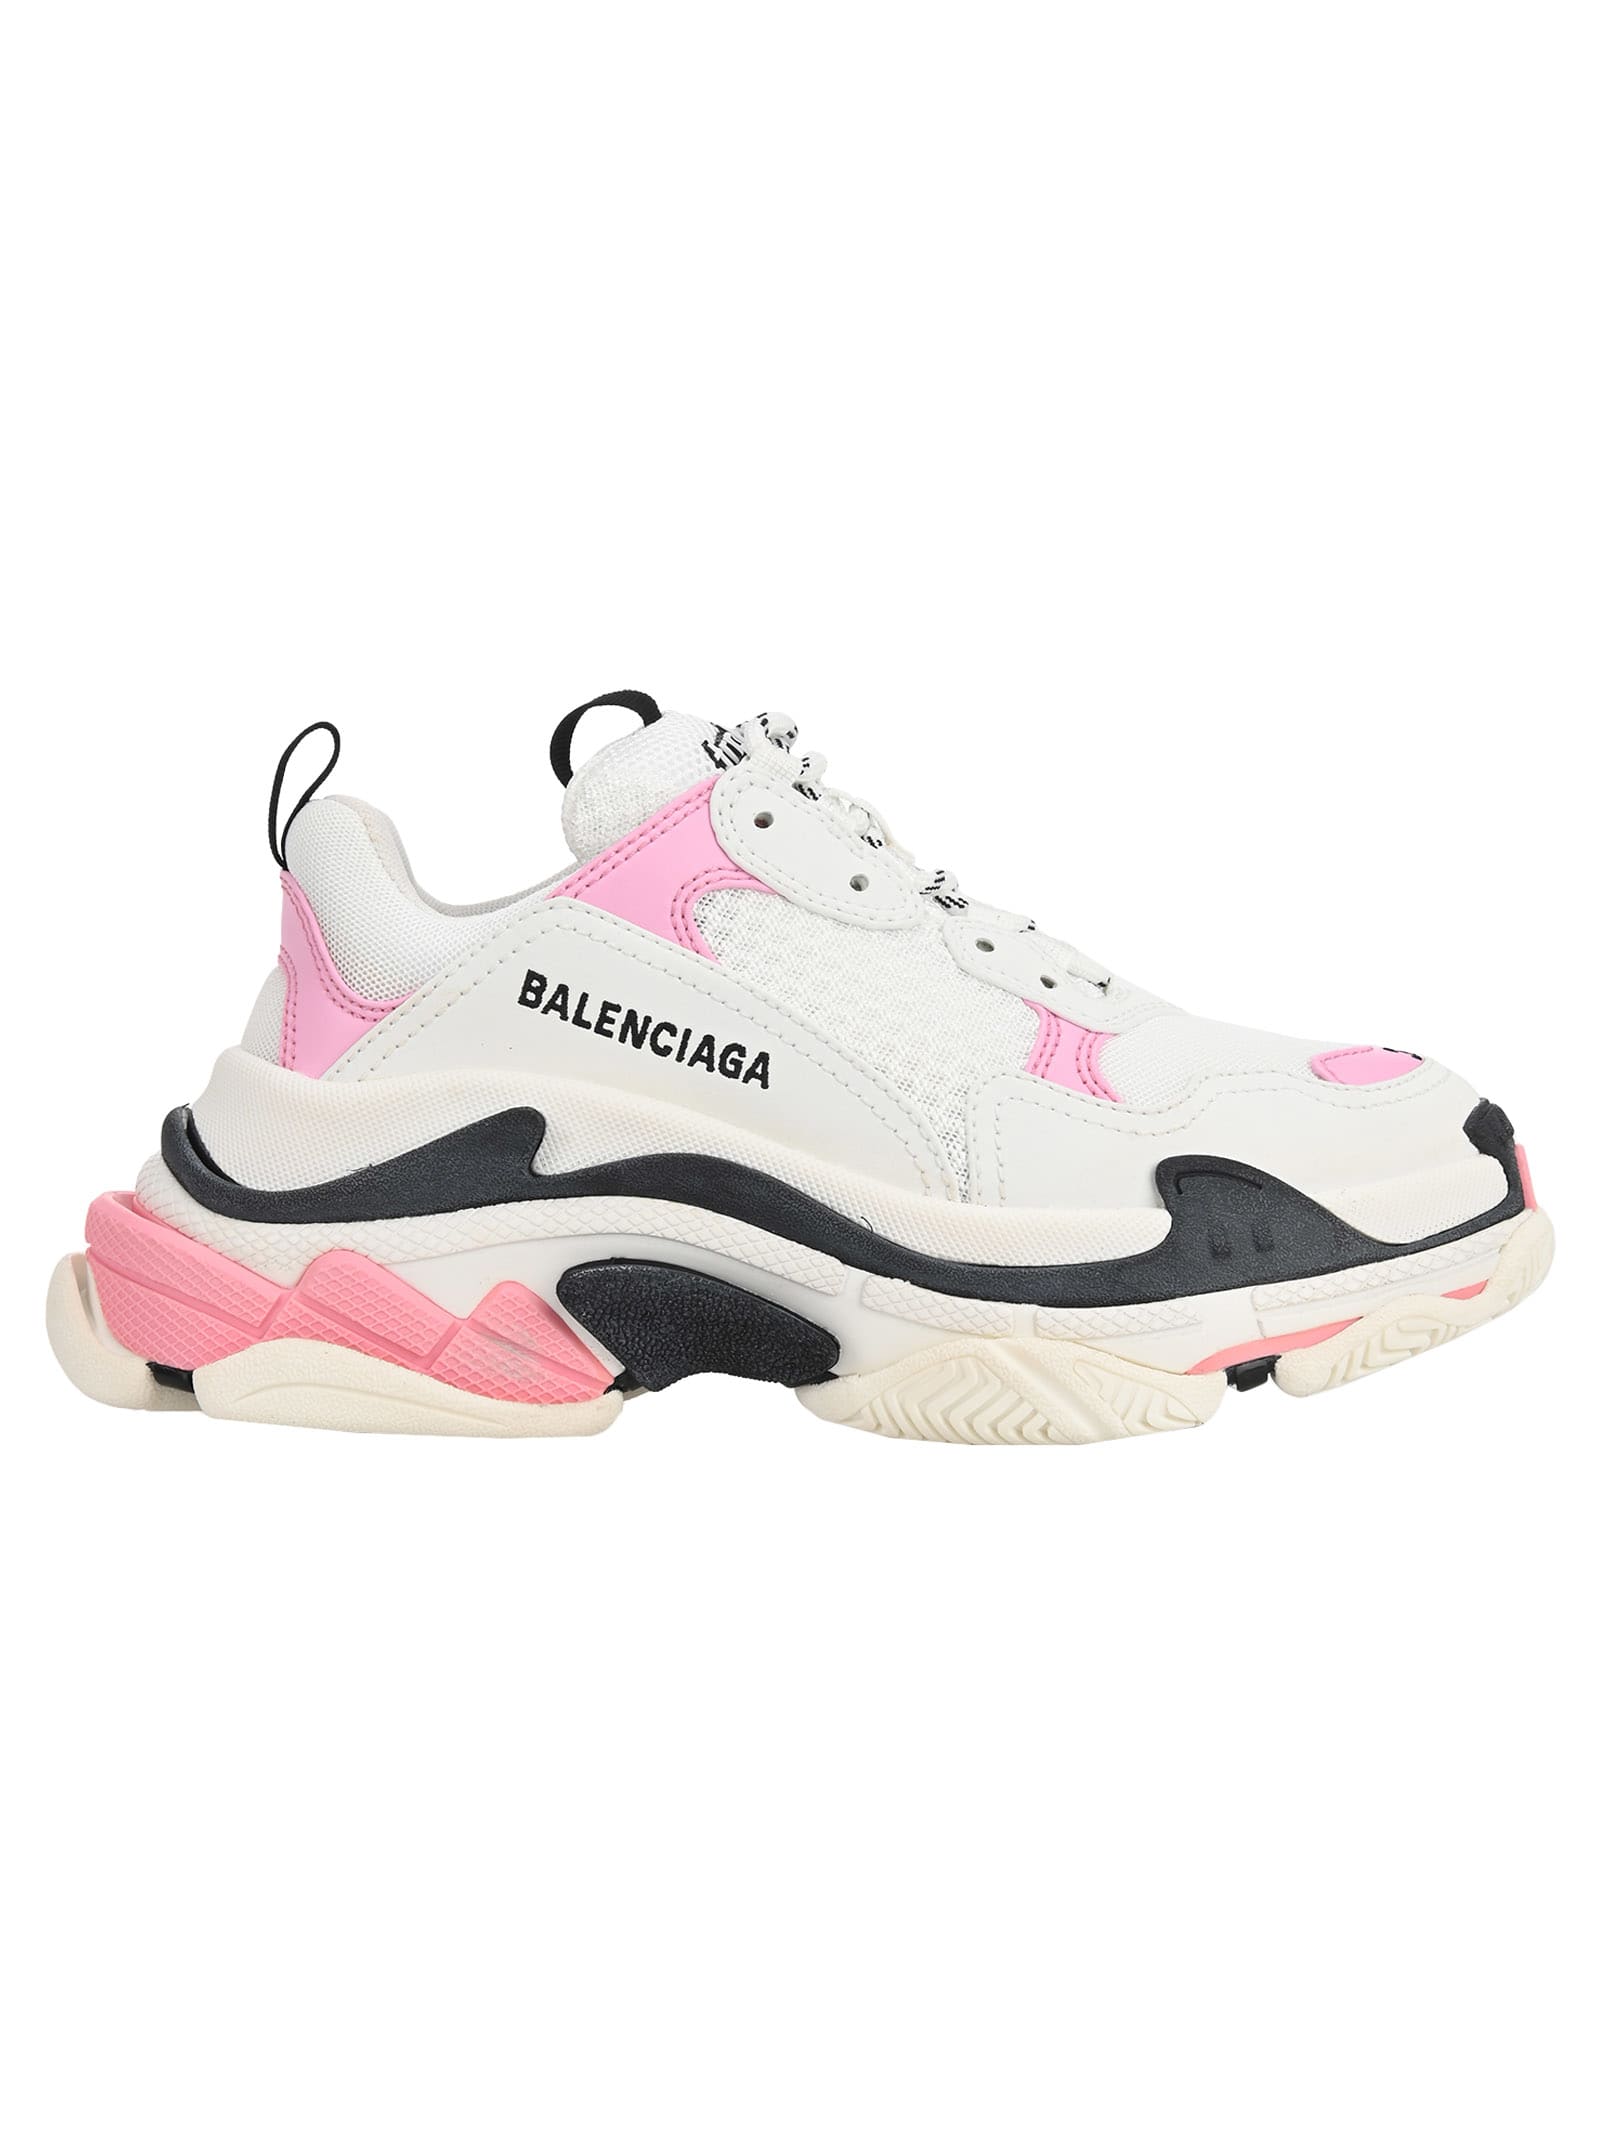 balenciaga sneakers pink price